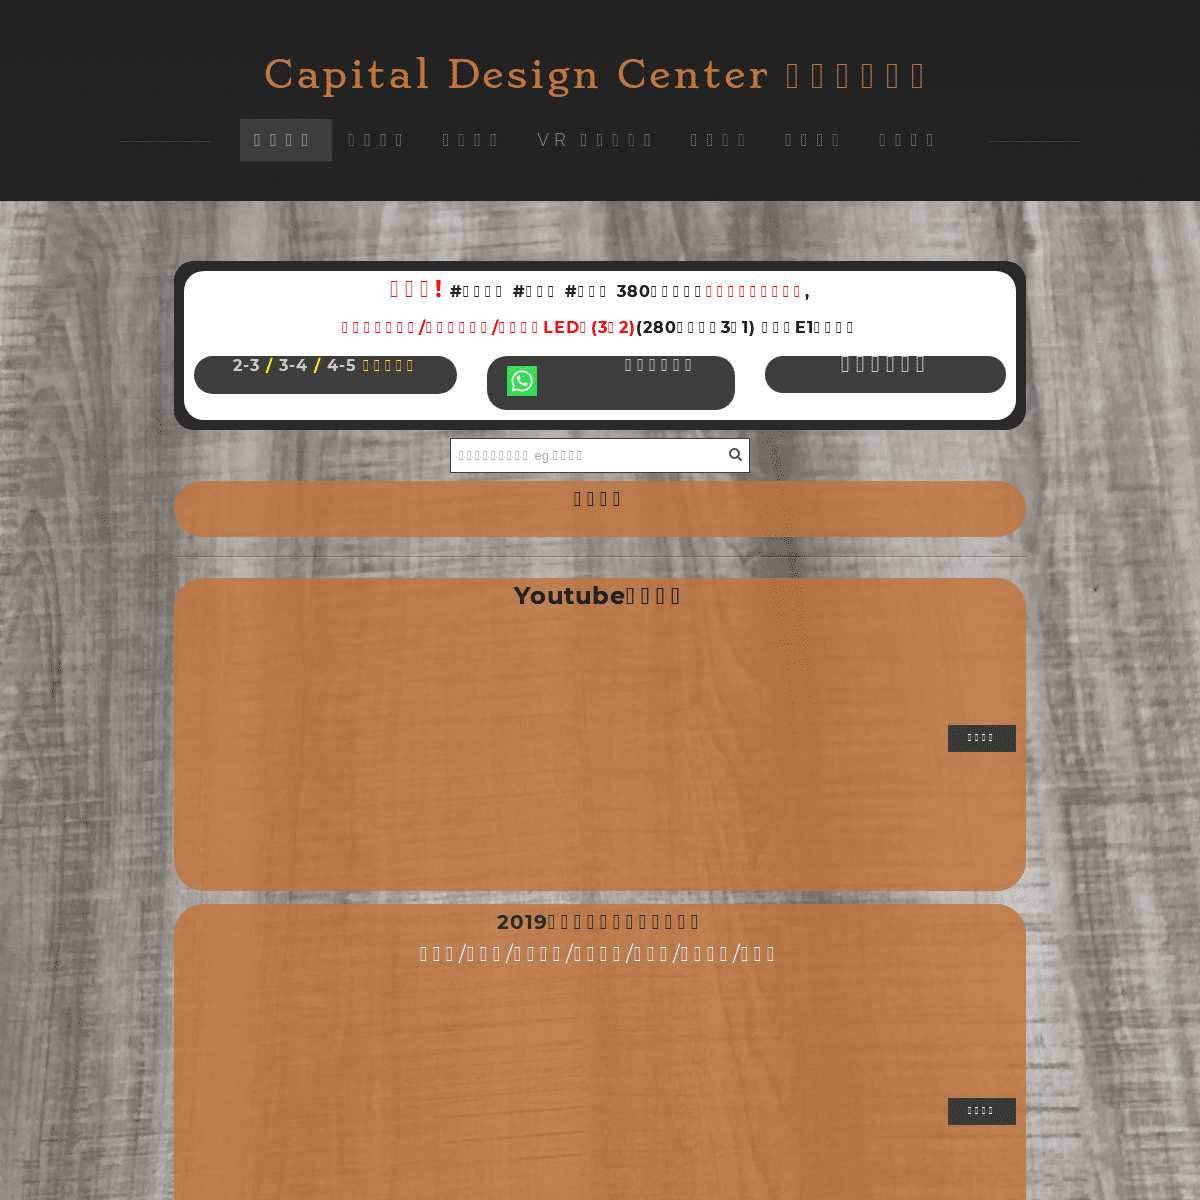 A complete backup of capitaldesign-center.com